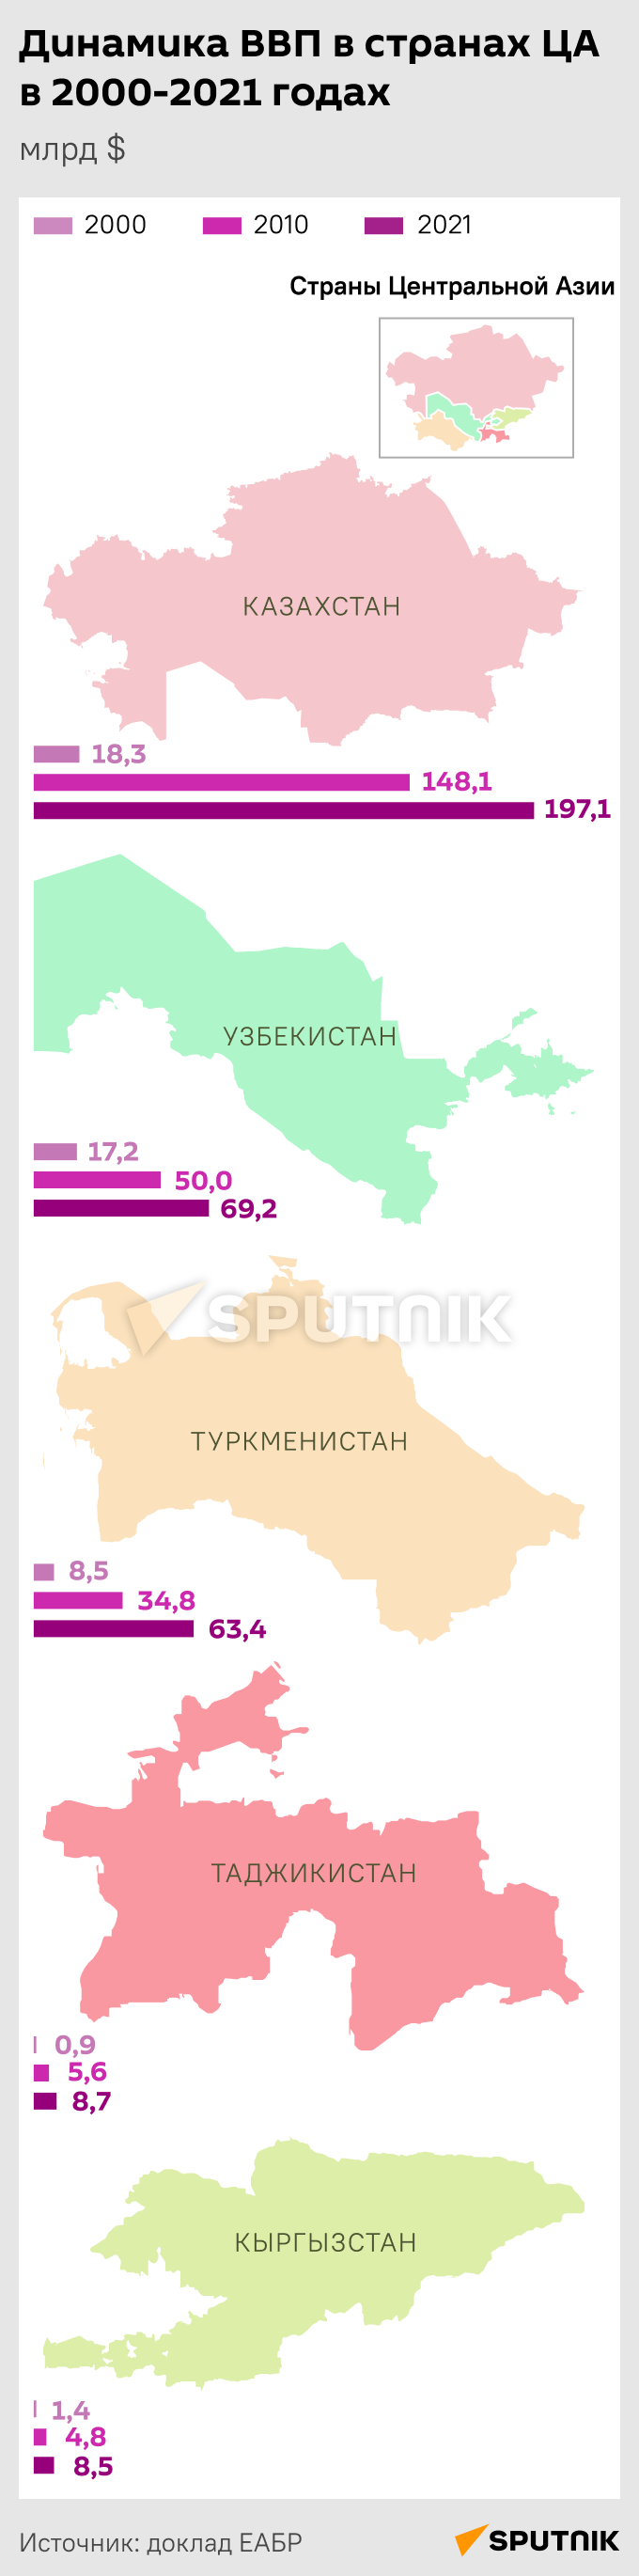 Динамика ВВП в странах ЦА в 2000-2021 годах - Sputnik Таджикистан